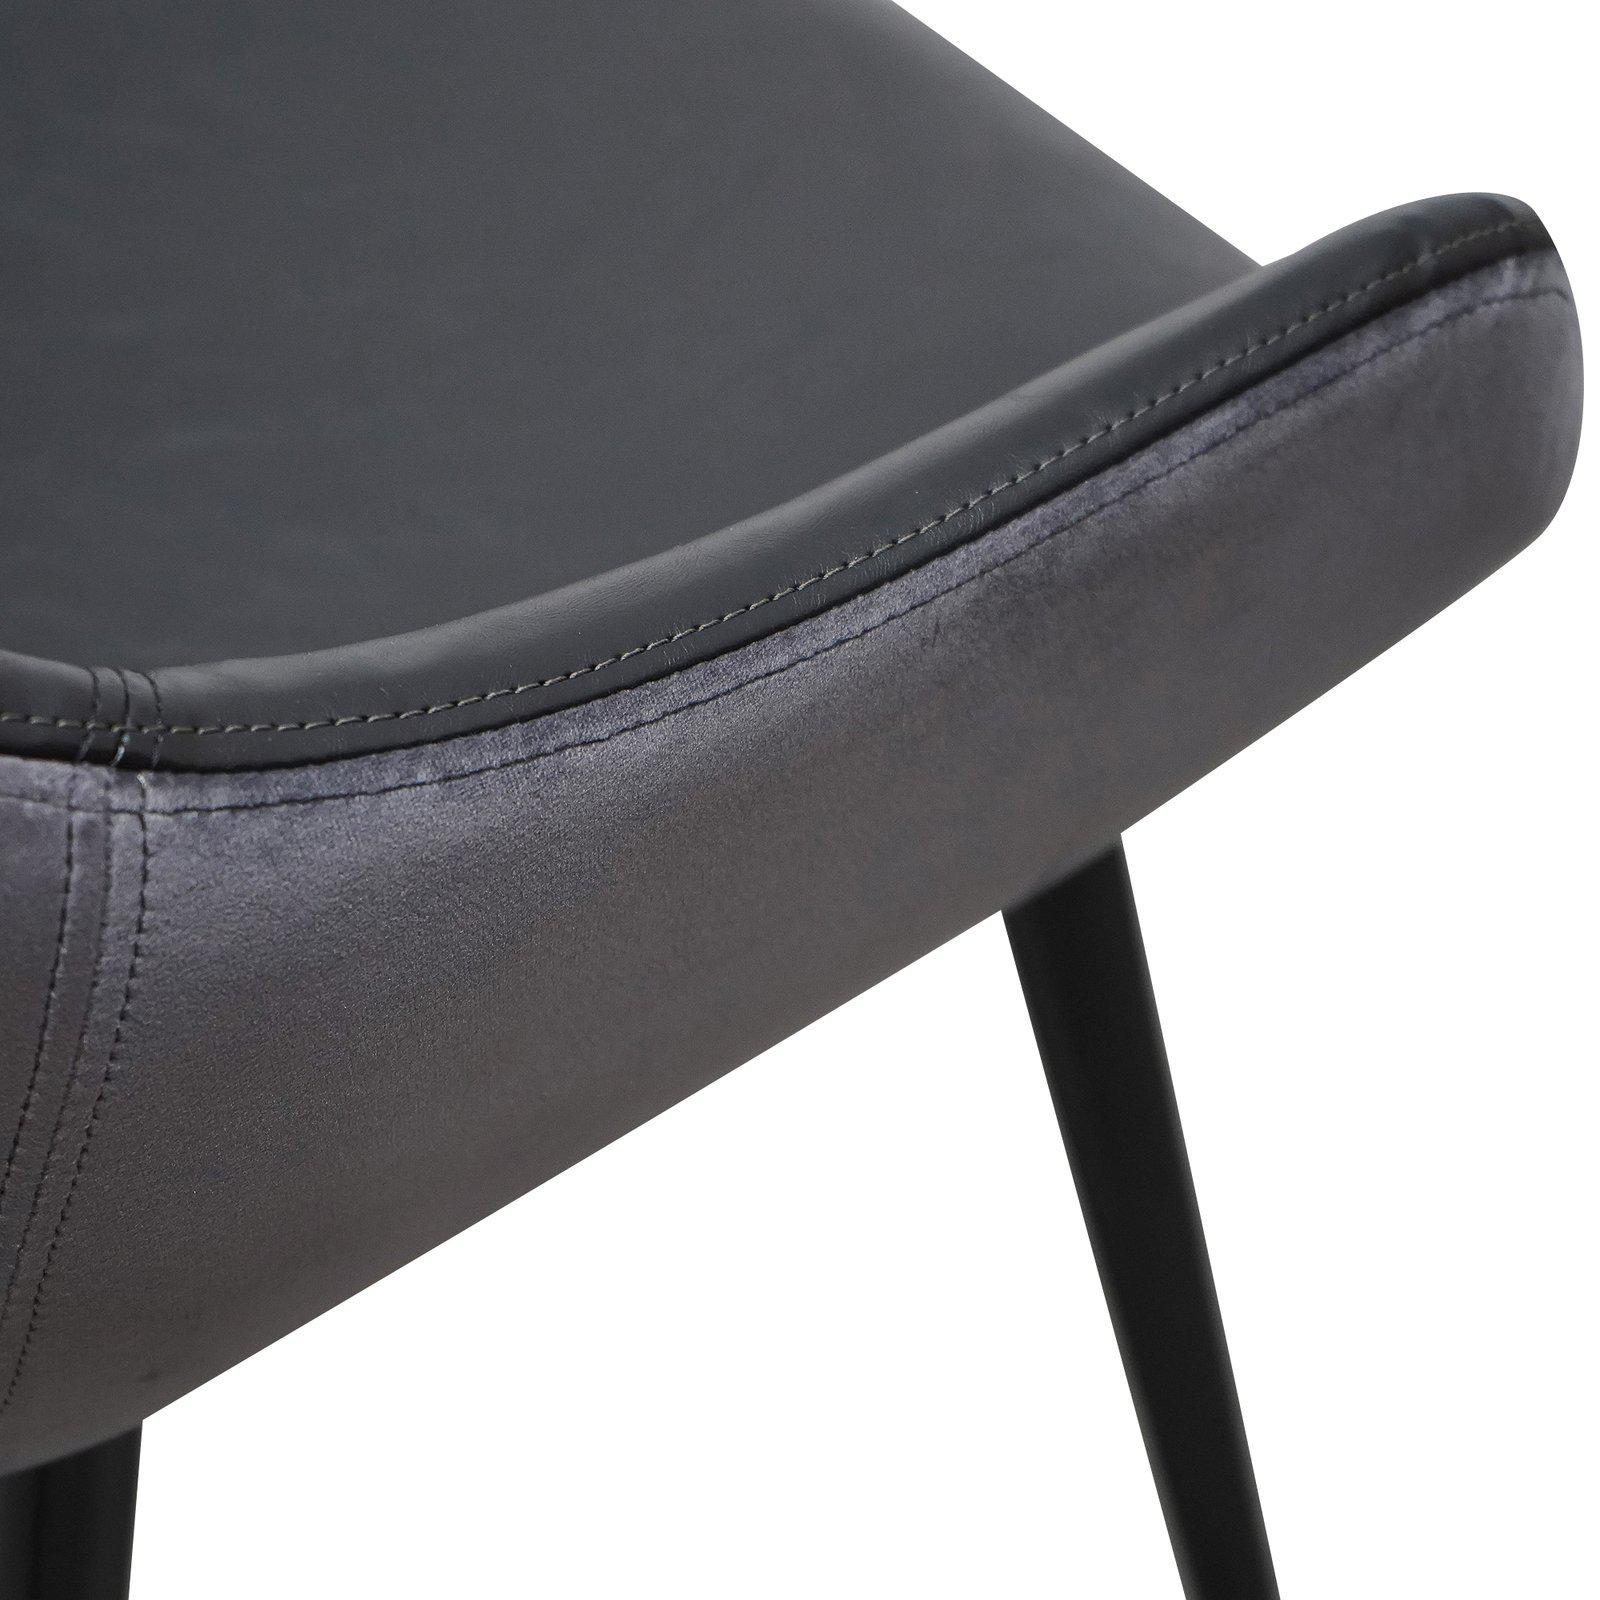 Pembroke | Black Leather, Grey Velvet Dining Chairs | Set Of 2 | Black